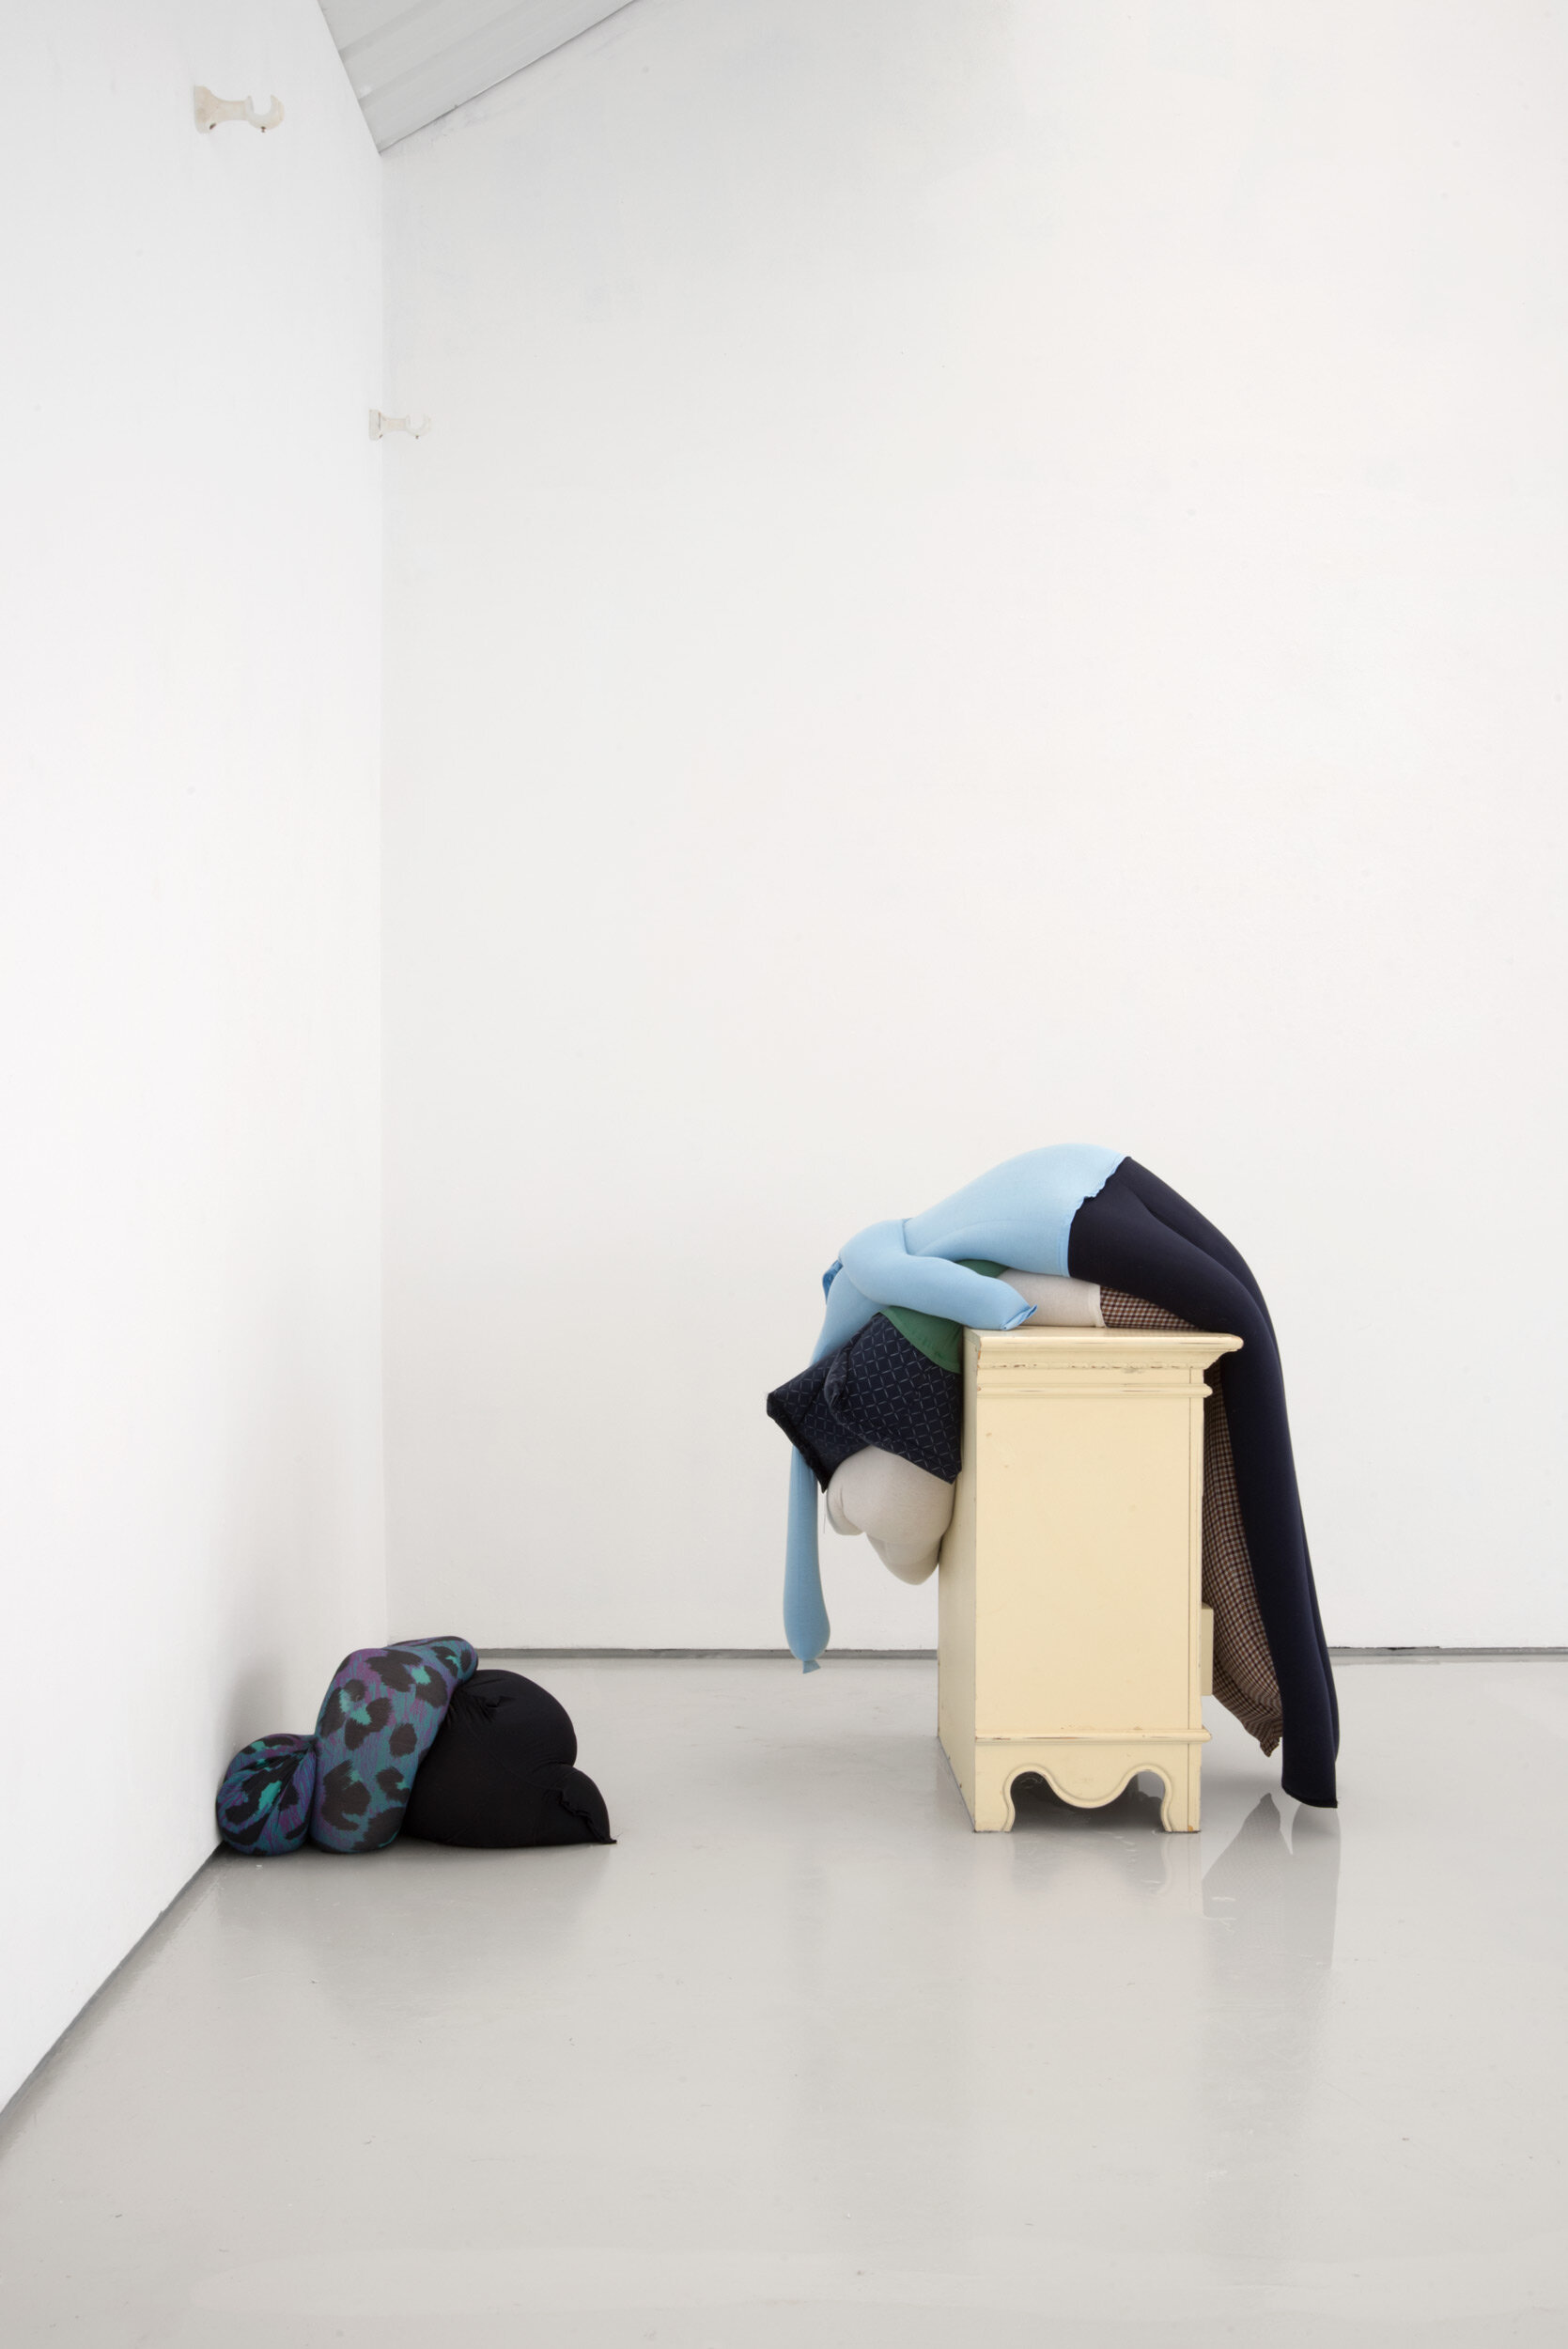 Fall, slump, drop on a bedside cabinet in water[...], Installation View, Alex Farrar, Bloc Projects, 2019, 8.jpg